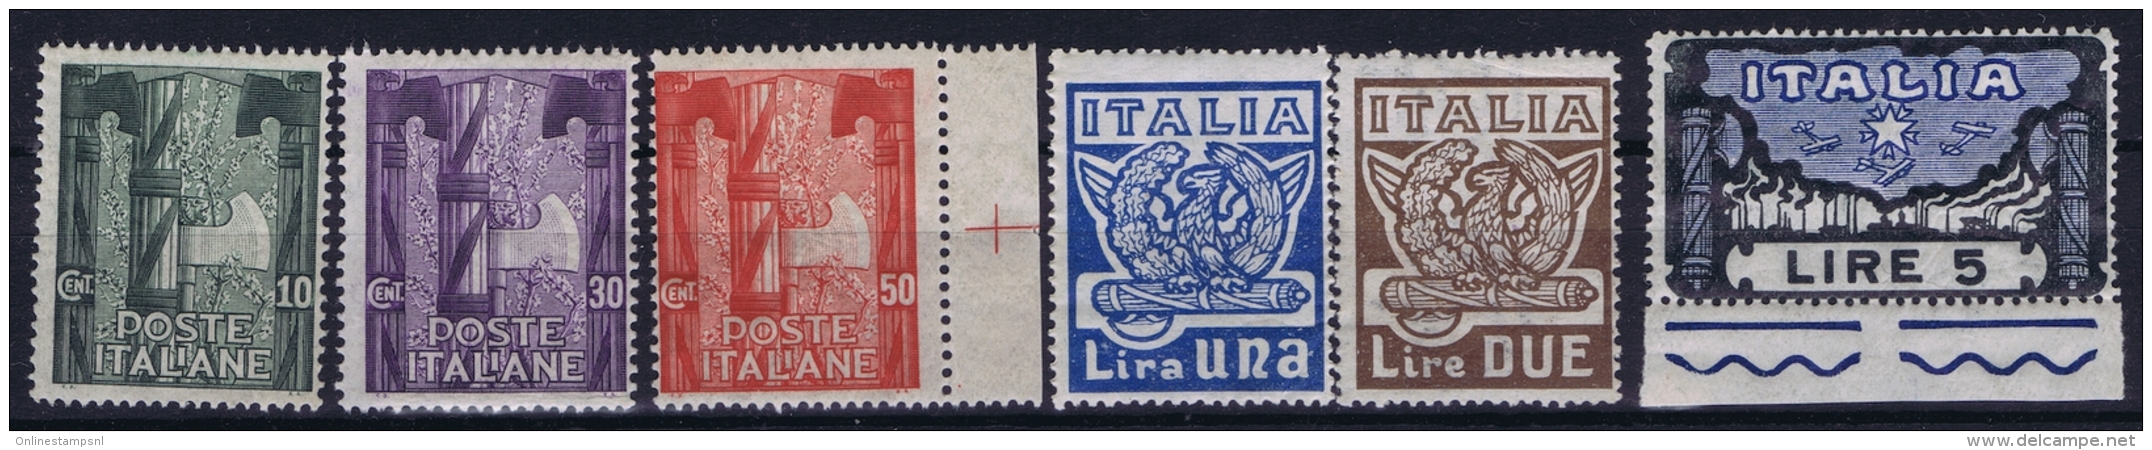 Italy: Sa 141 - 146  , Mi 177 - 182  Postfrisch/neuf Sans Charniere /MNH/** 1923 - Mint/hinged